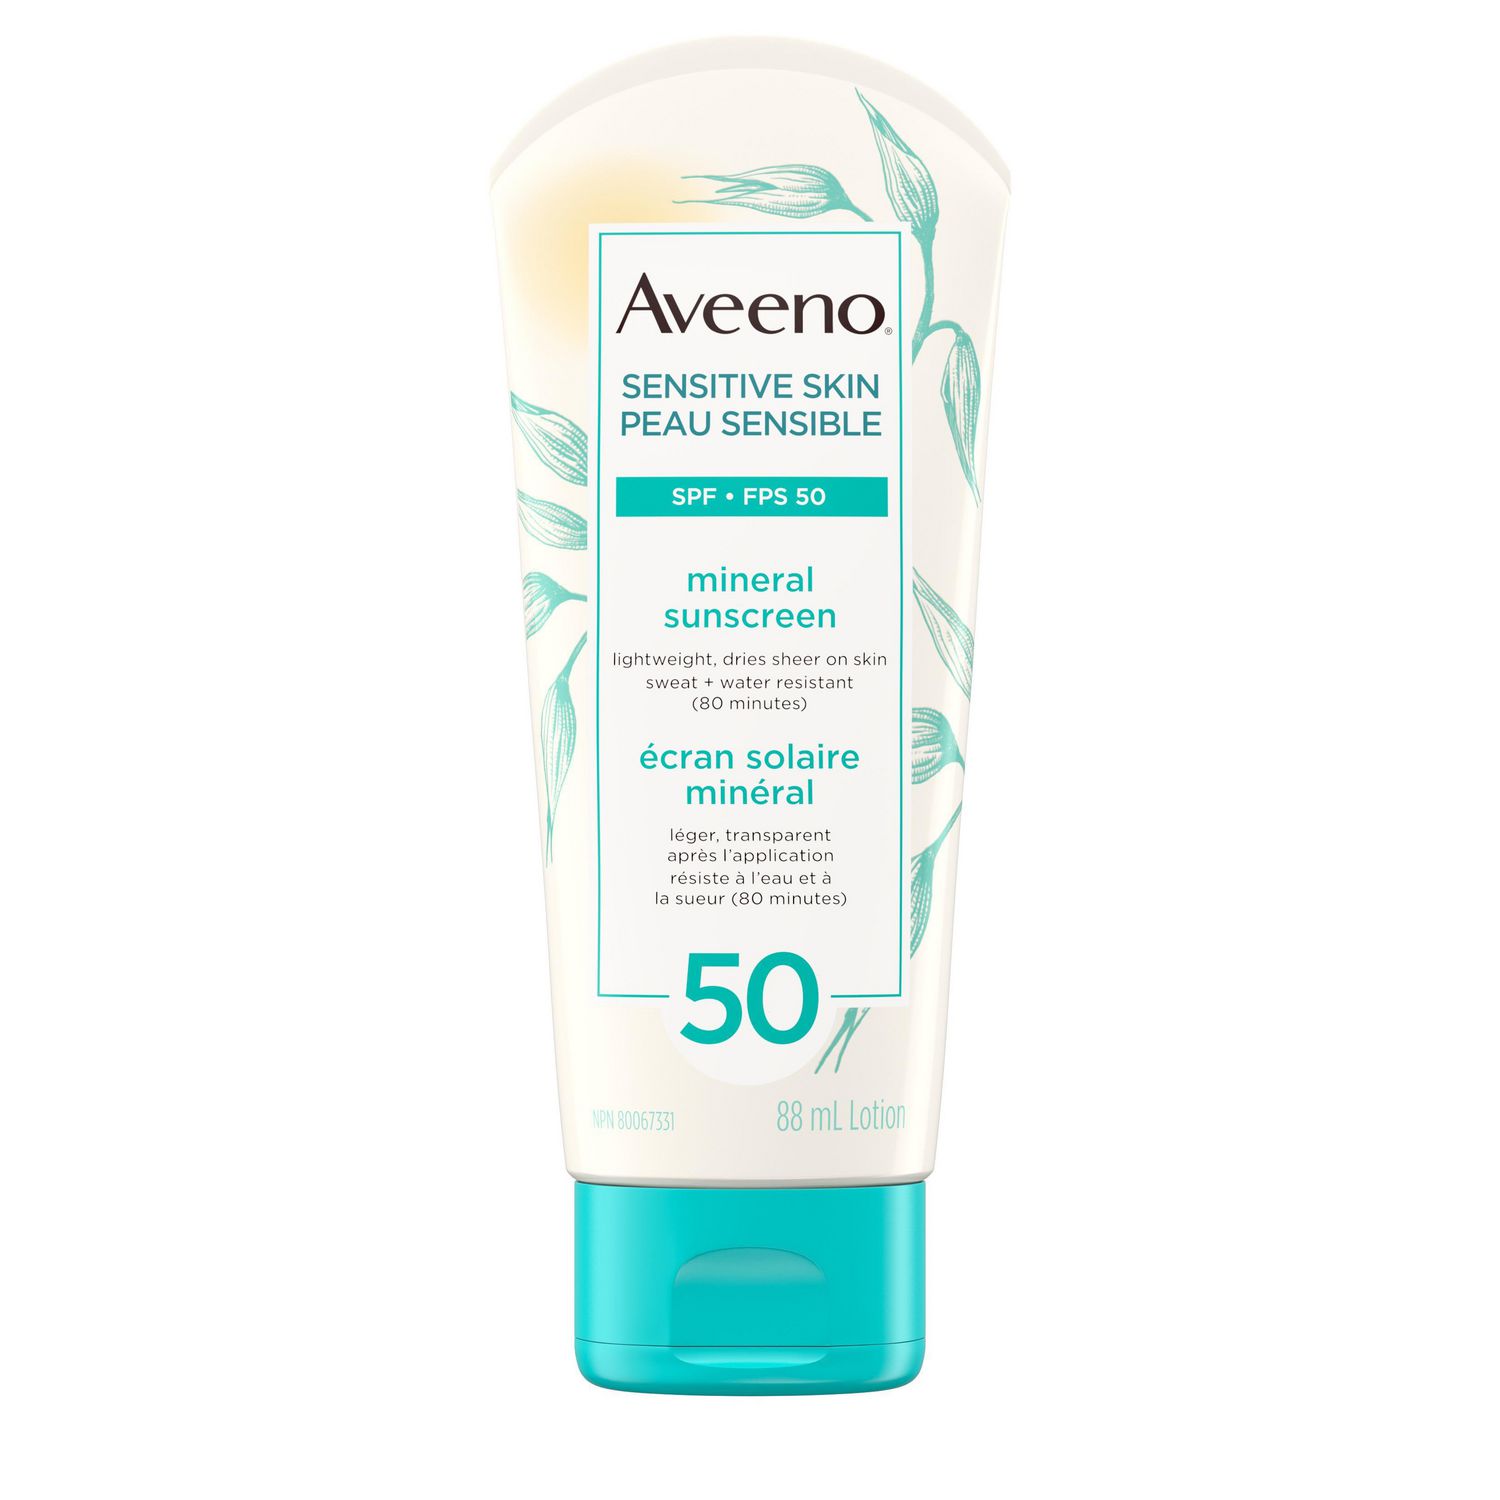 Aveeno Mineral Sunscreen for Sensitive Skin SPF 50 | Walmart Canada
